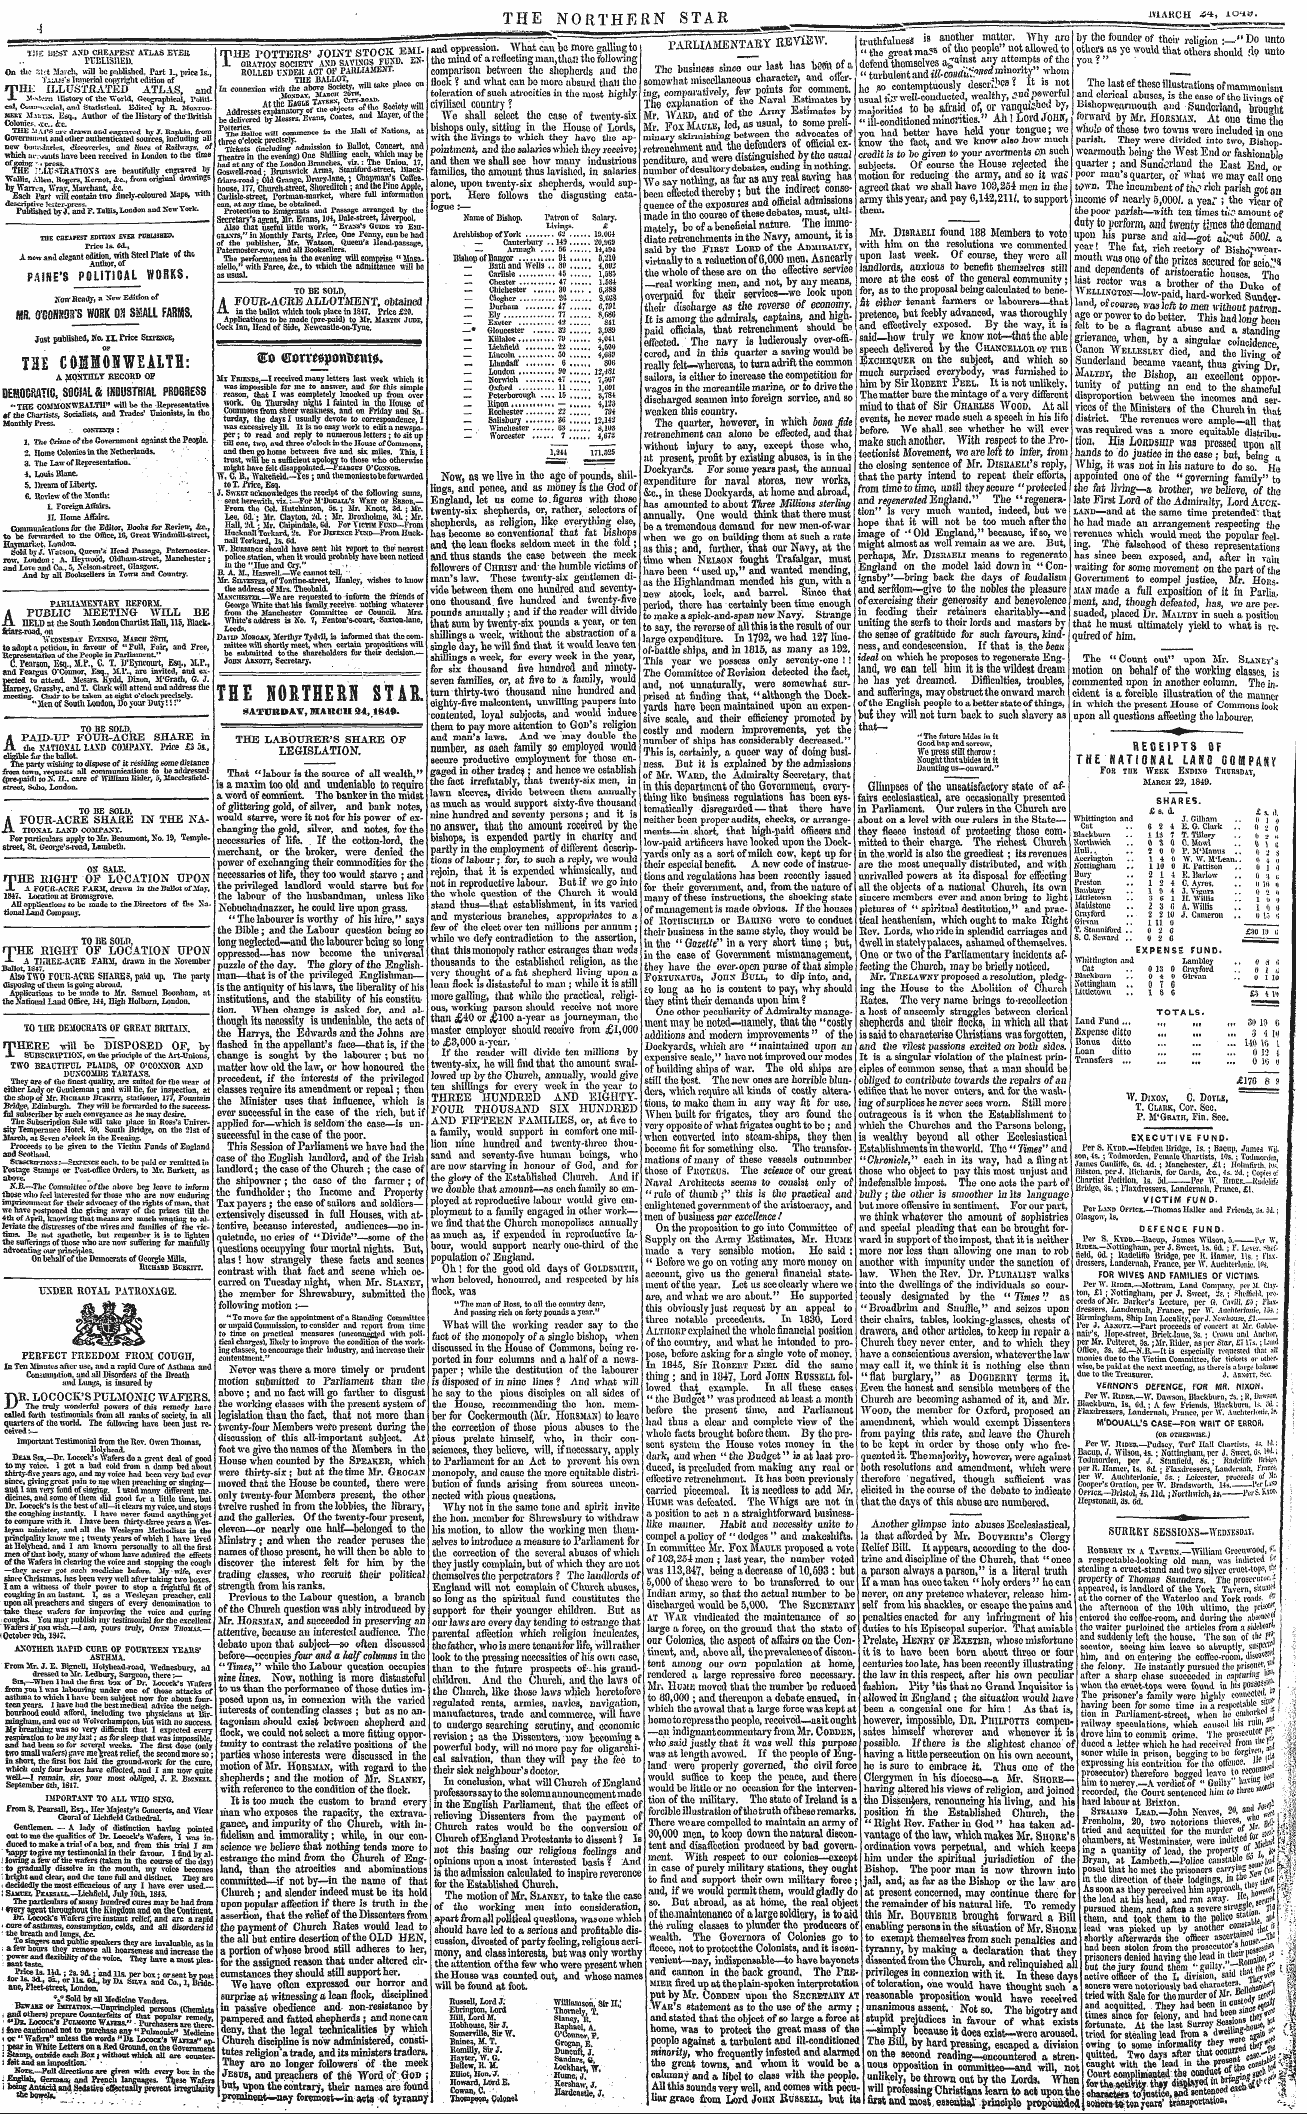 Northern Star (1837-1852): jS F Y, 2nd edition - The Labourer's Share Of Legislation.